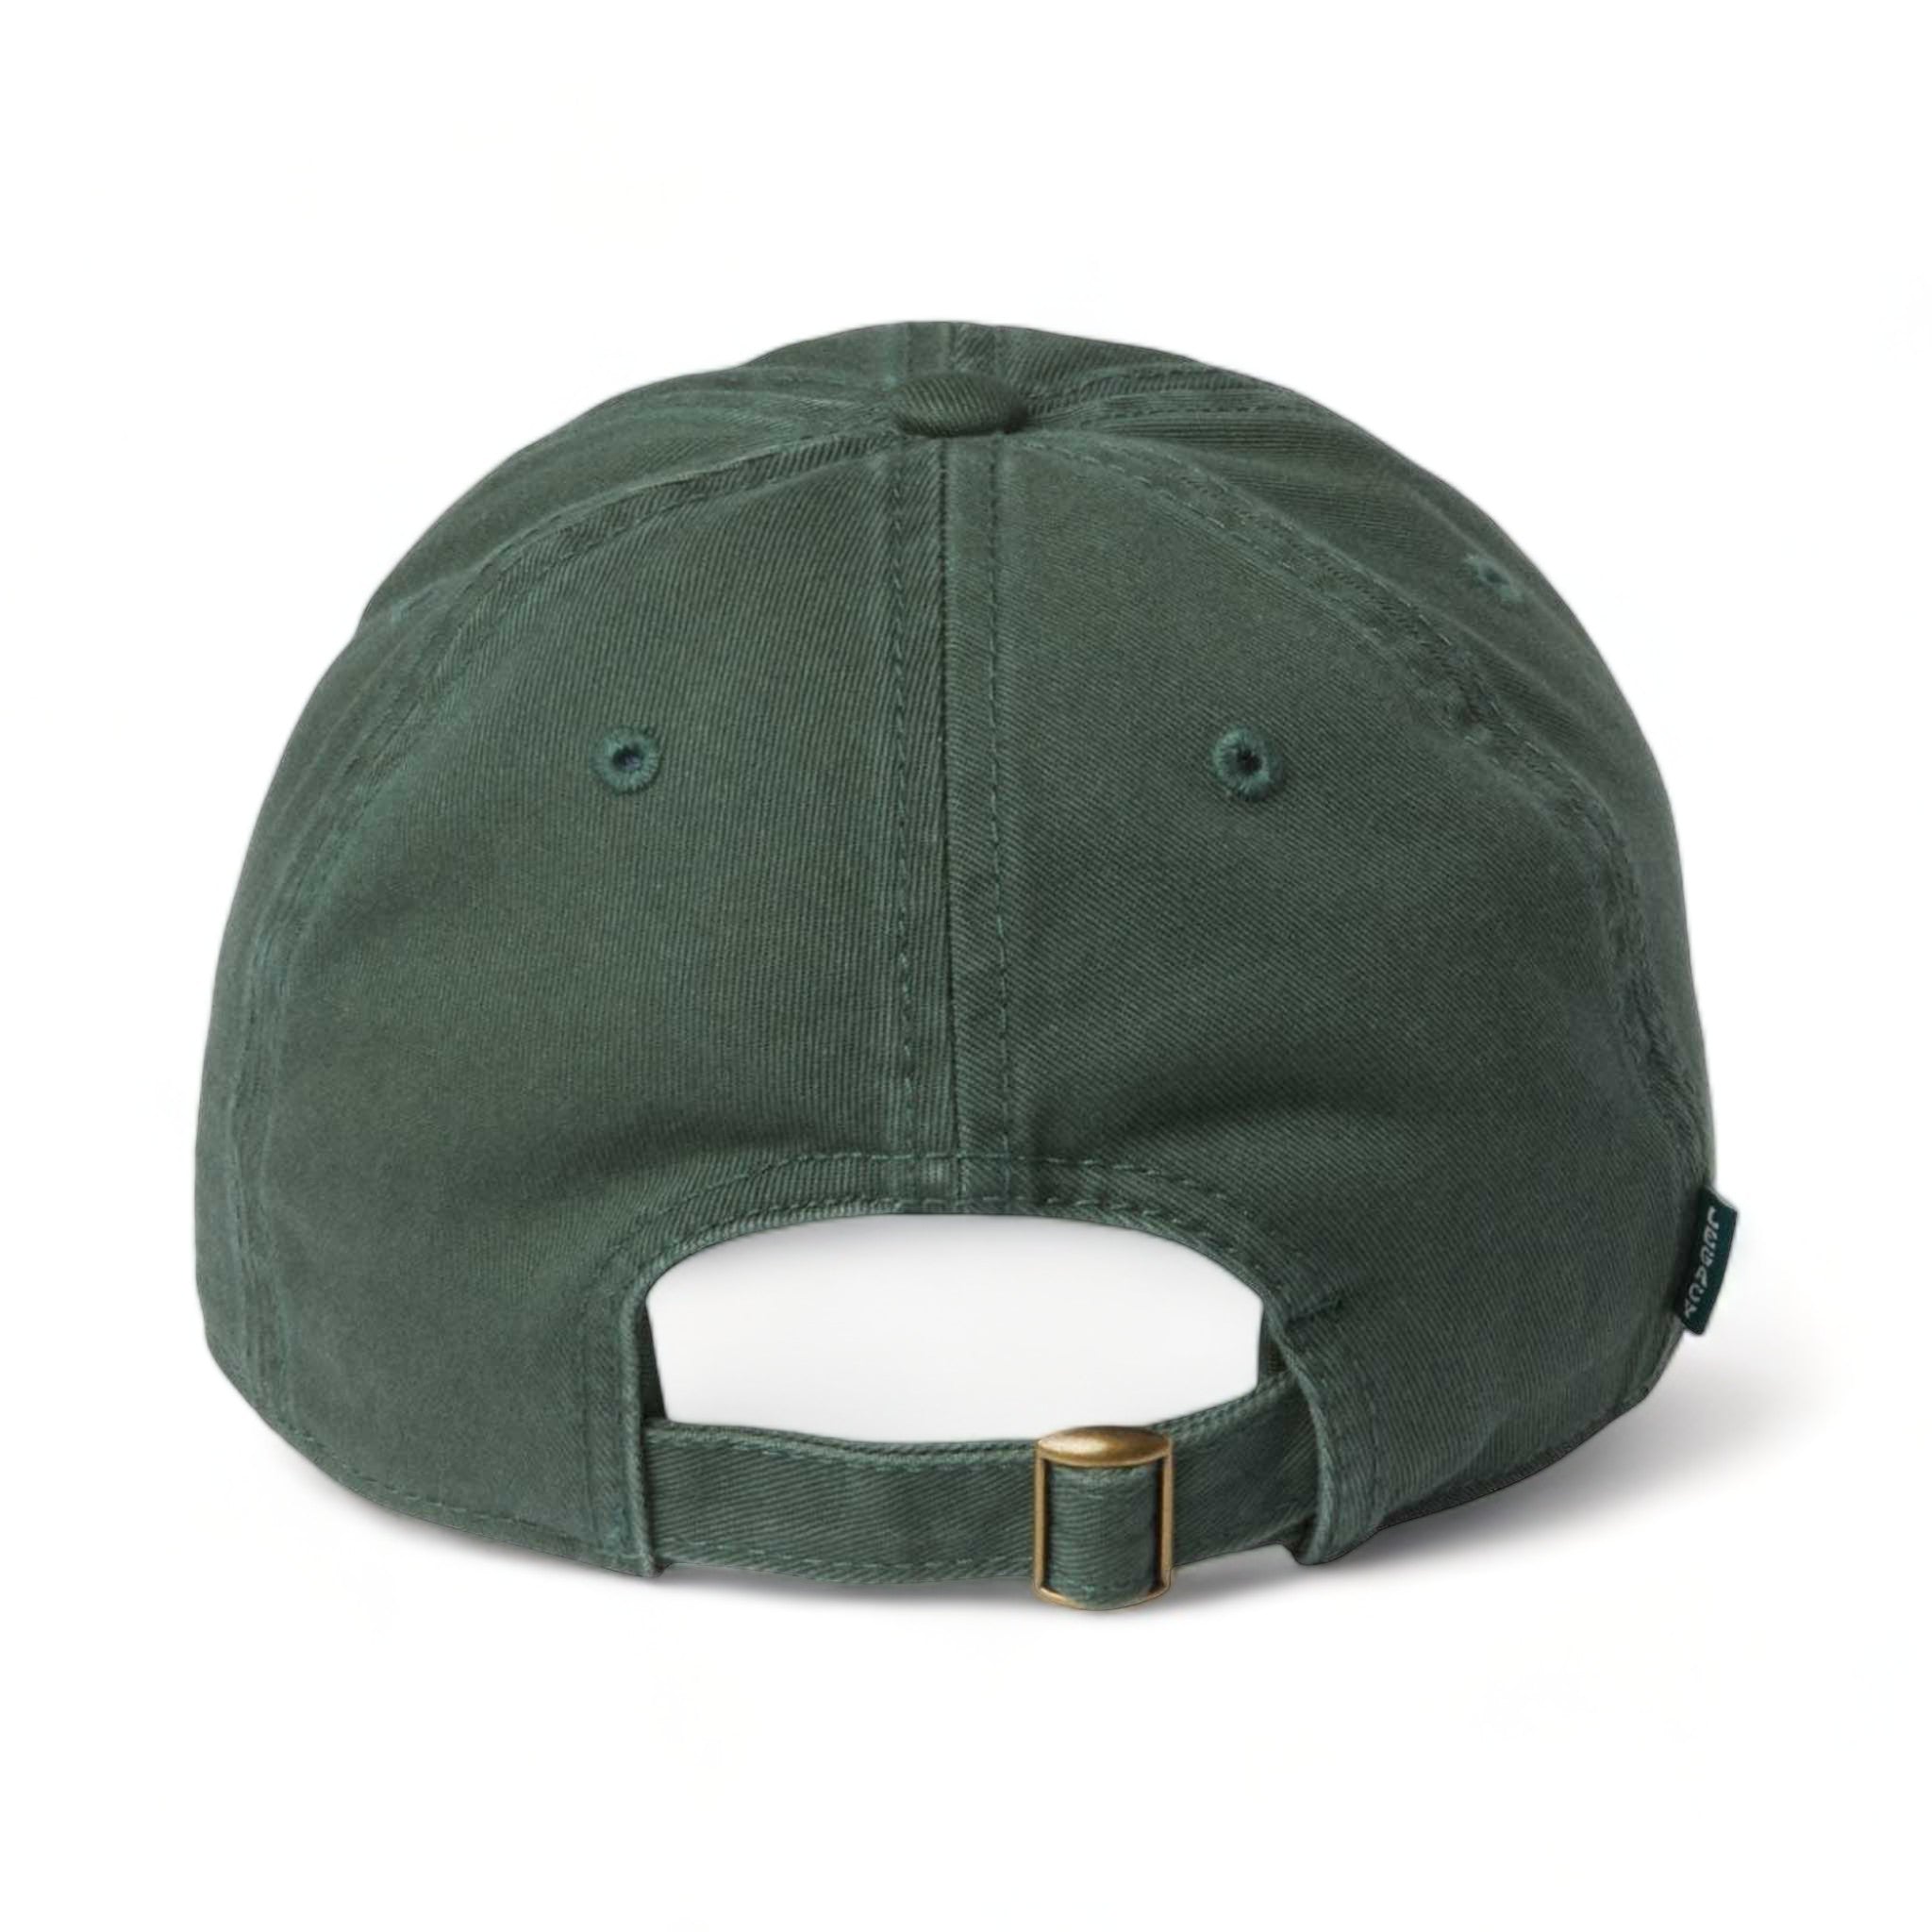 Back view of LEGACY EZA custom hat in dark green